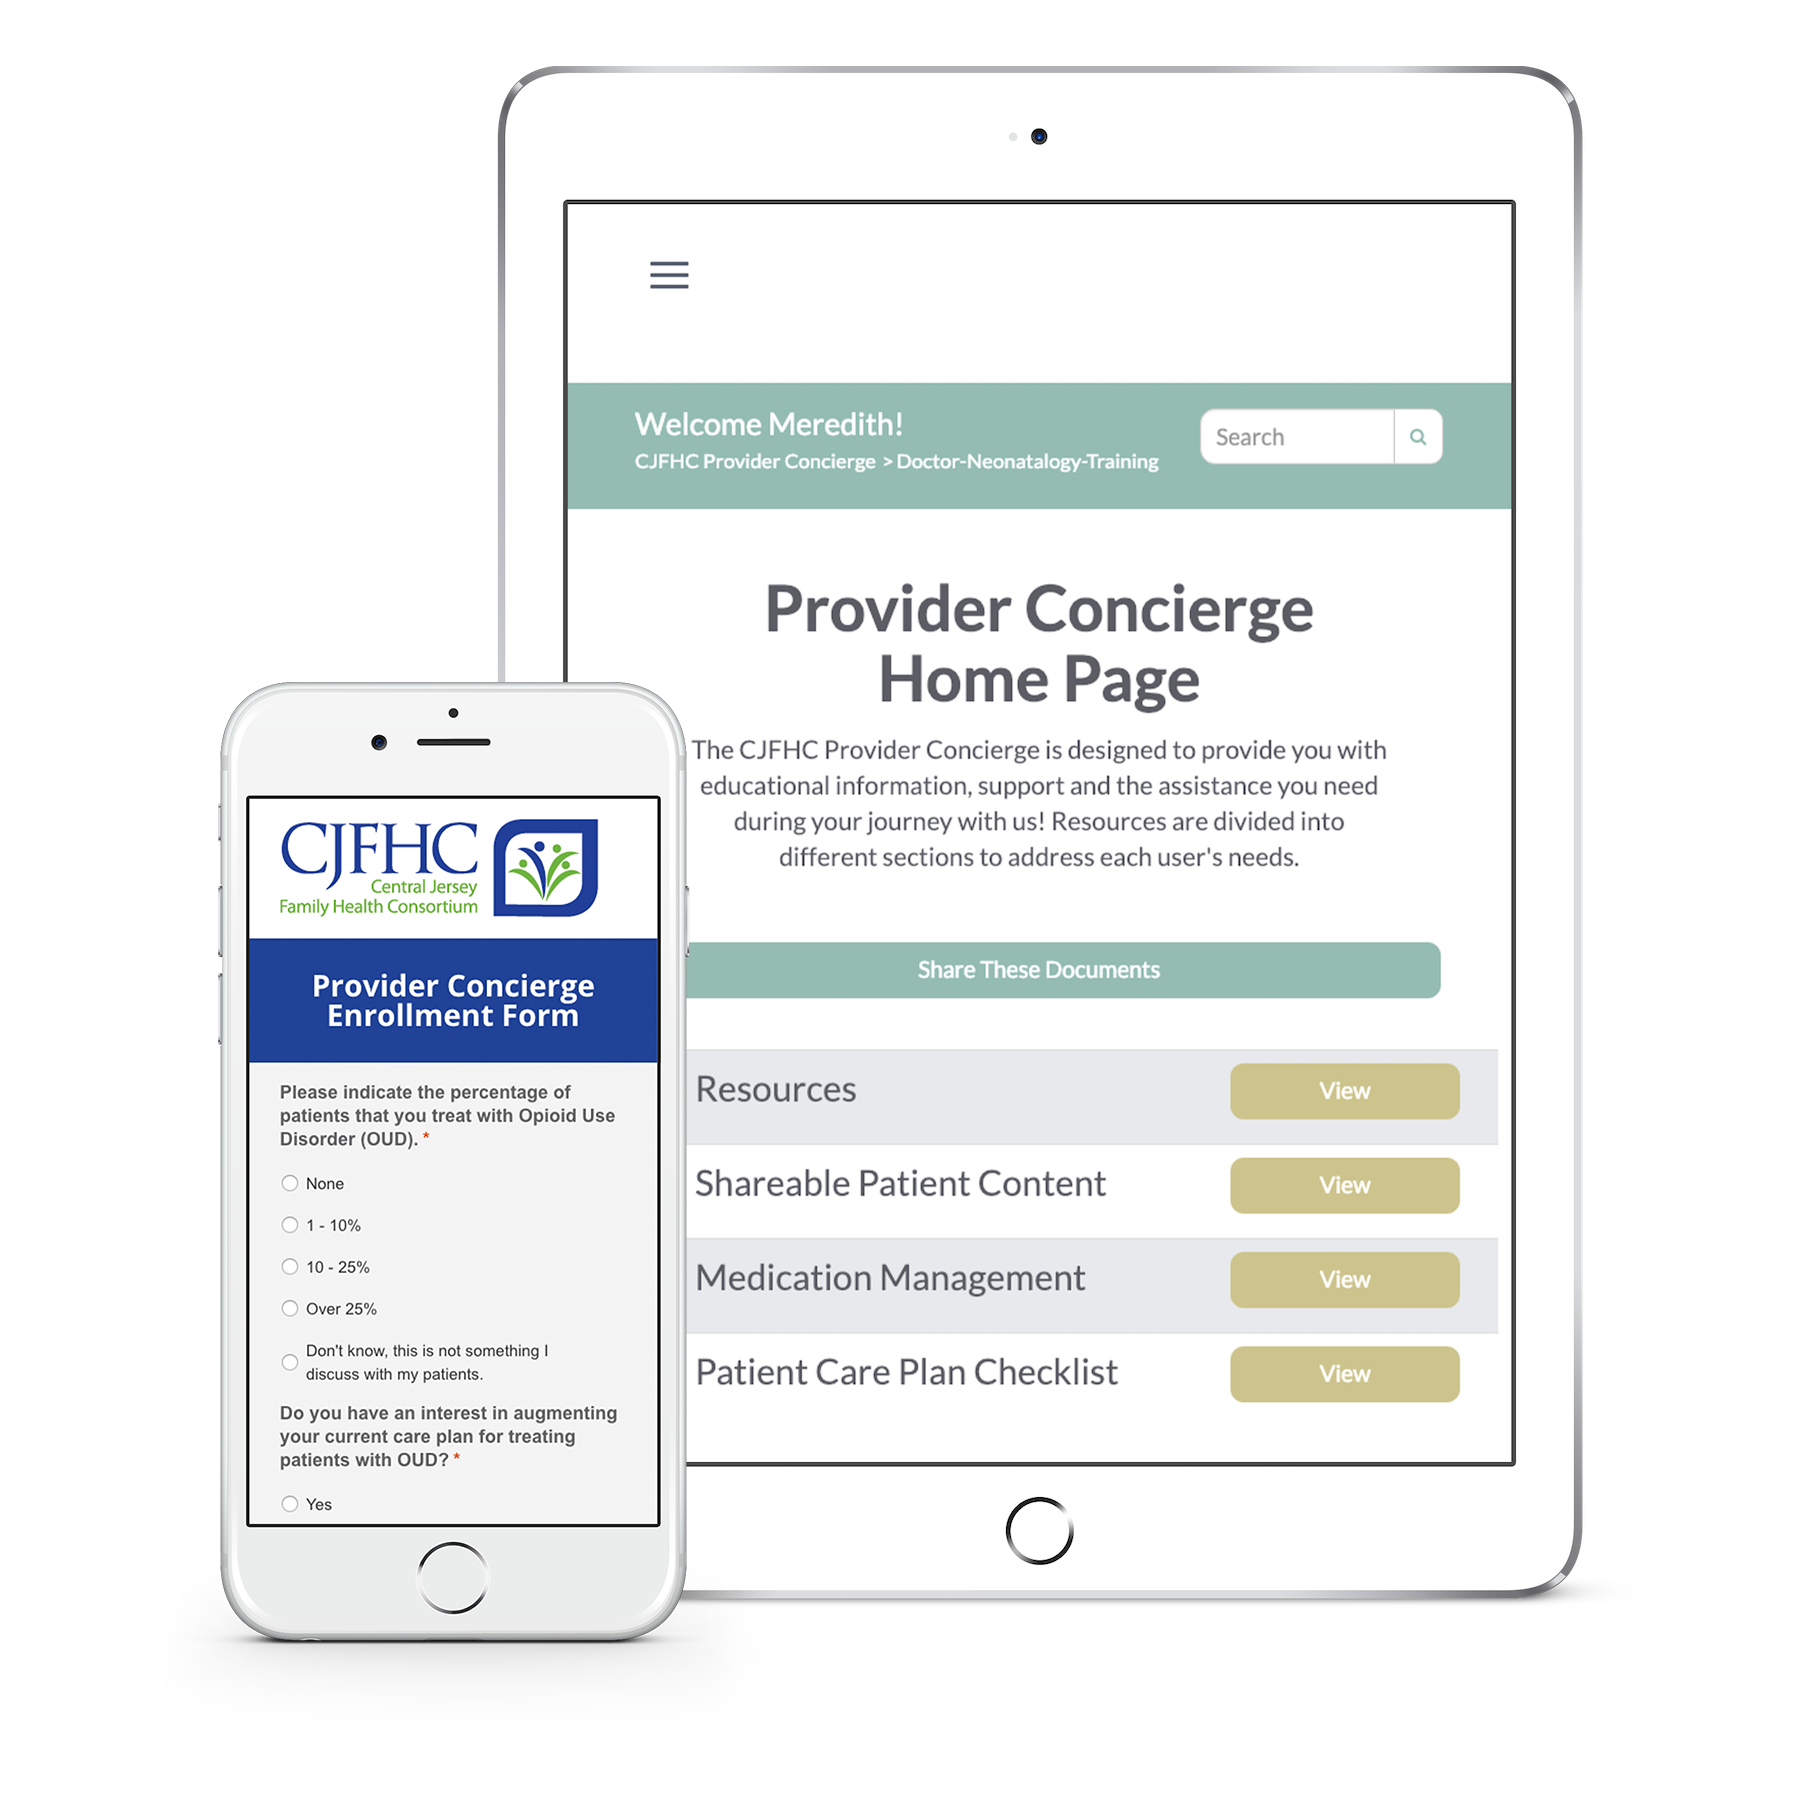 CJHFC Provider Concierge Enrollment form (on mobile) and homepage (on tablet)